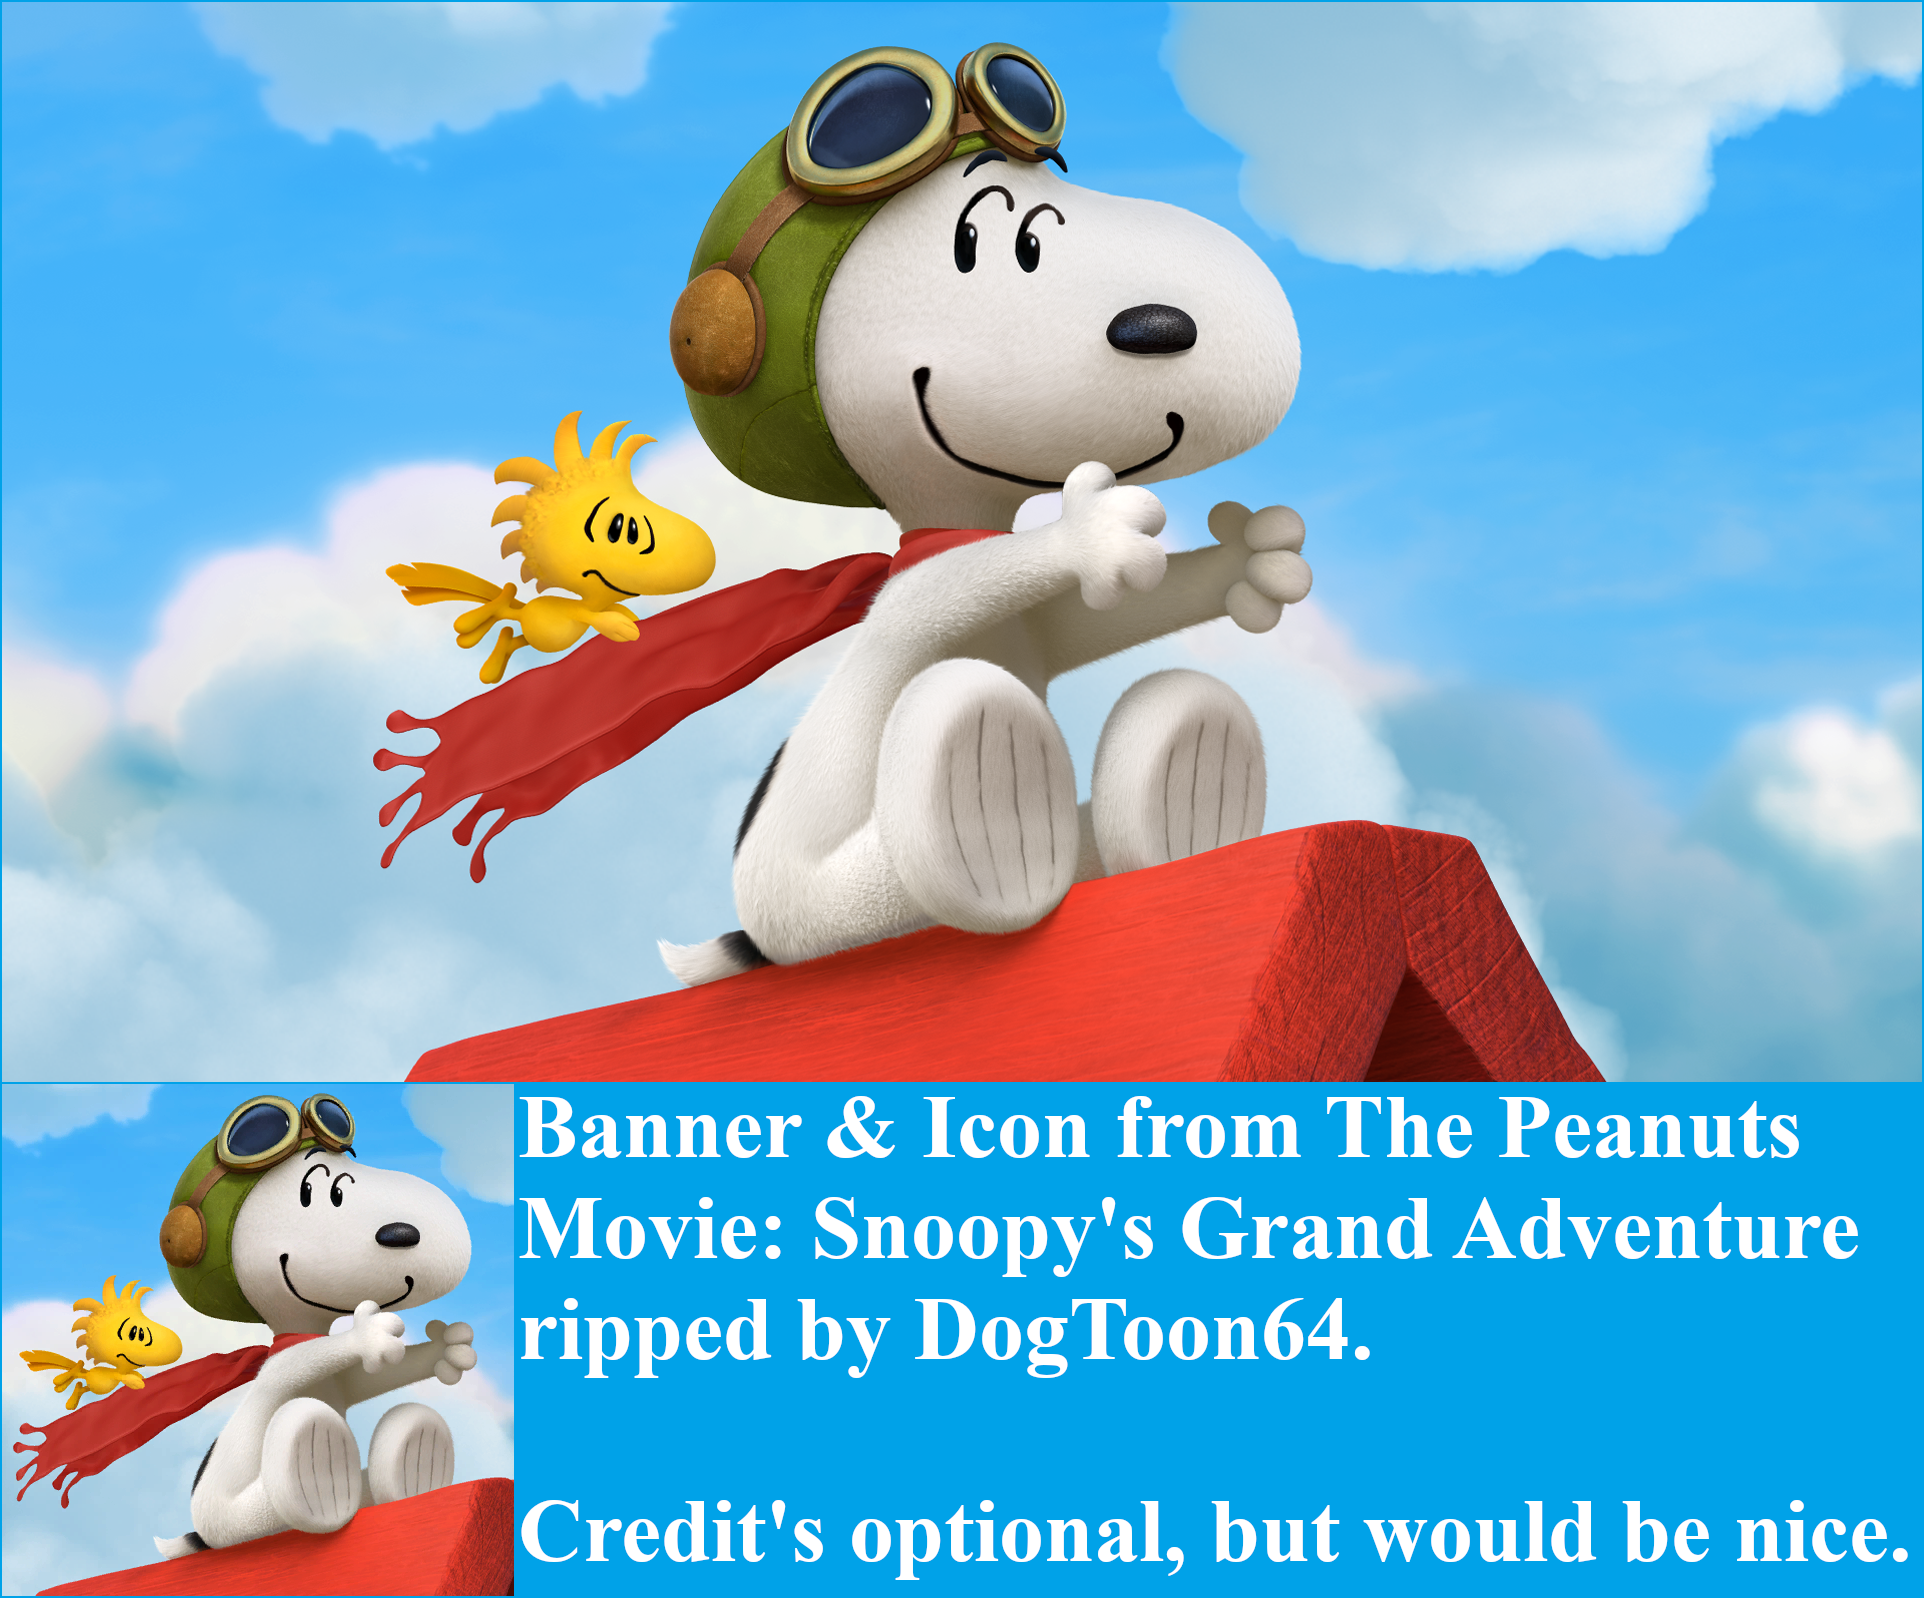 The Peanuts Movie: Snoopy's Grand Adventure - Banner & Icon